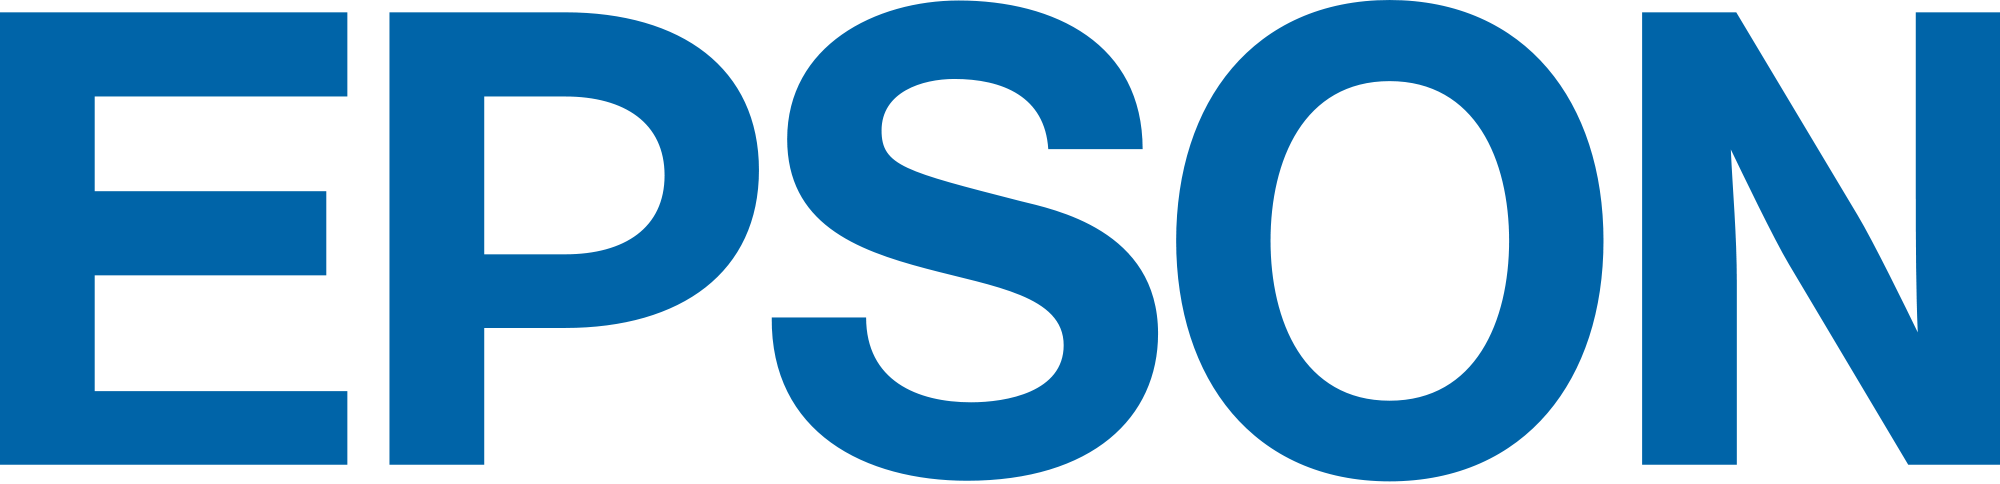 2000px-Epson_logo.svg